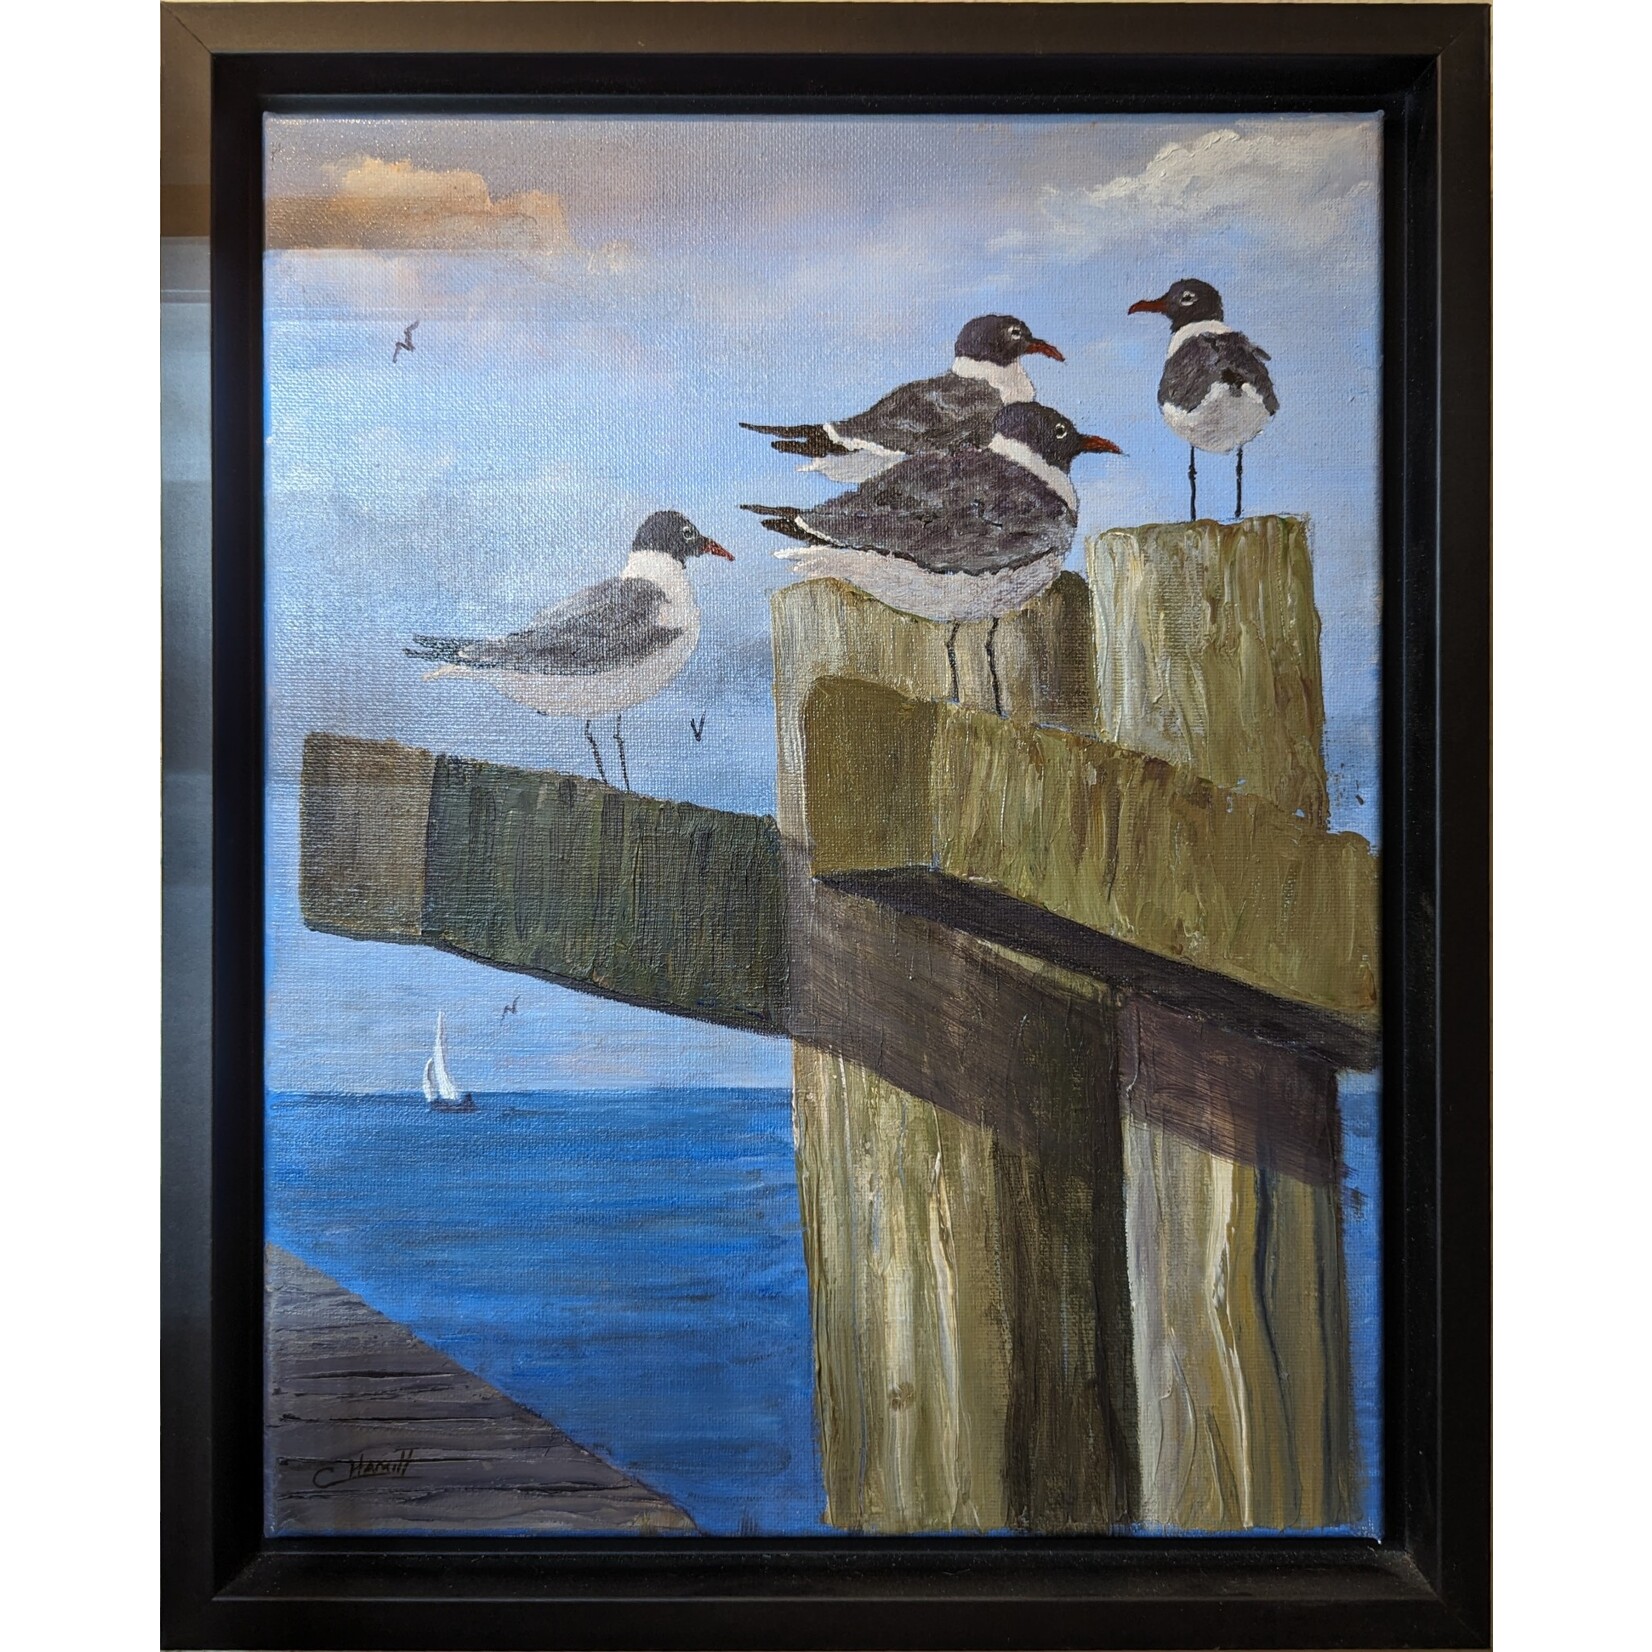 Catherine Hamill Art "Laughing Gulls Looking"